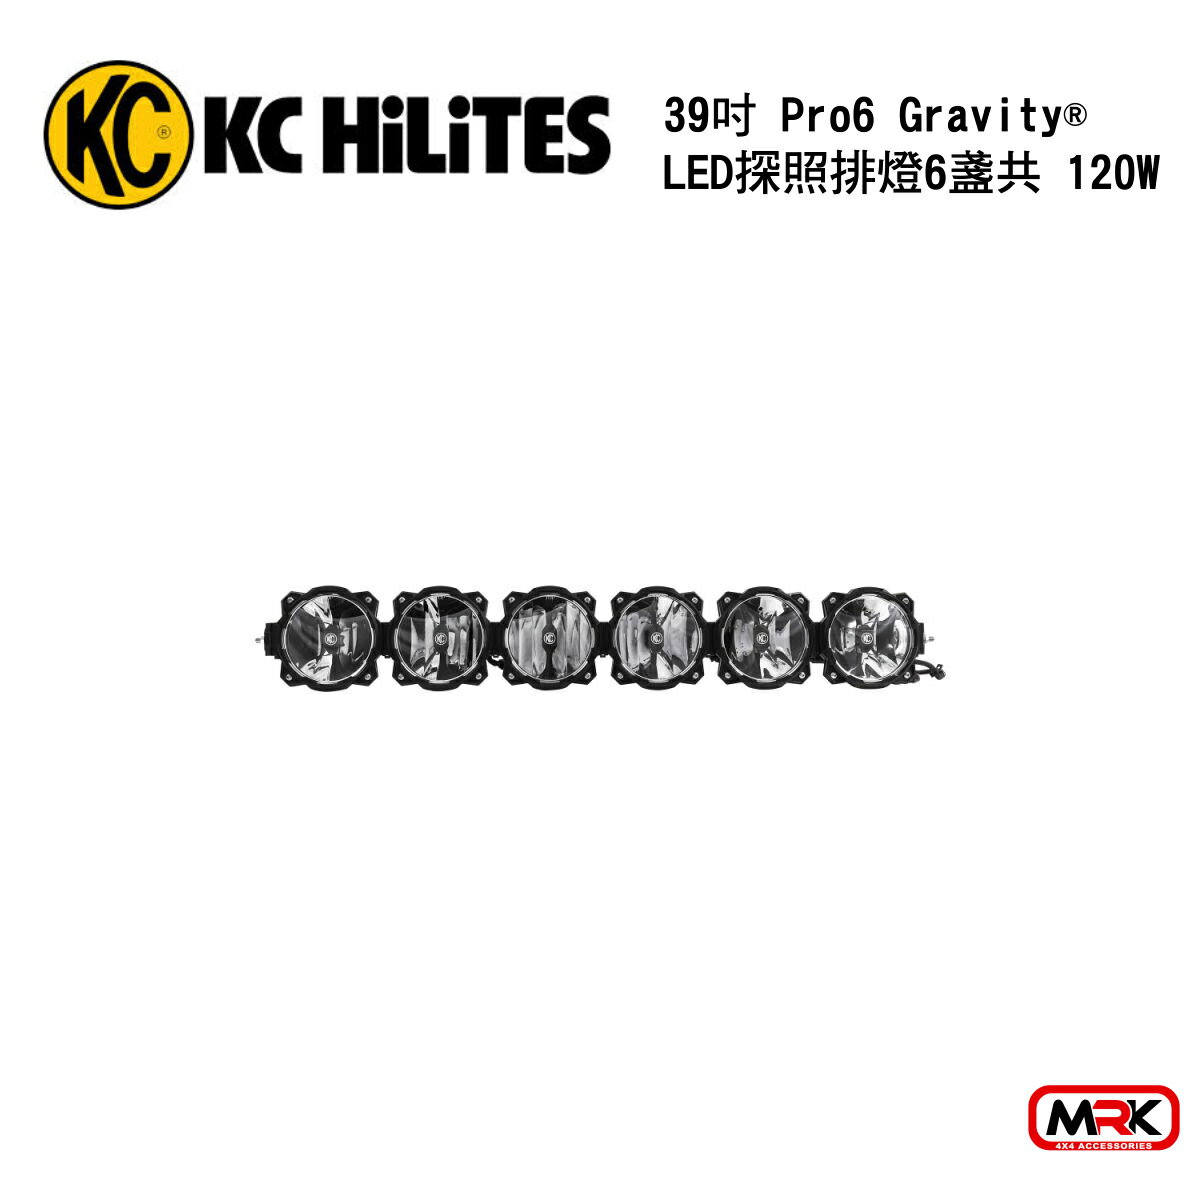 【MRK】KC Hilites LED bar 39吋 Pro6 Gravity® LED 探照排燈 6盞共120W